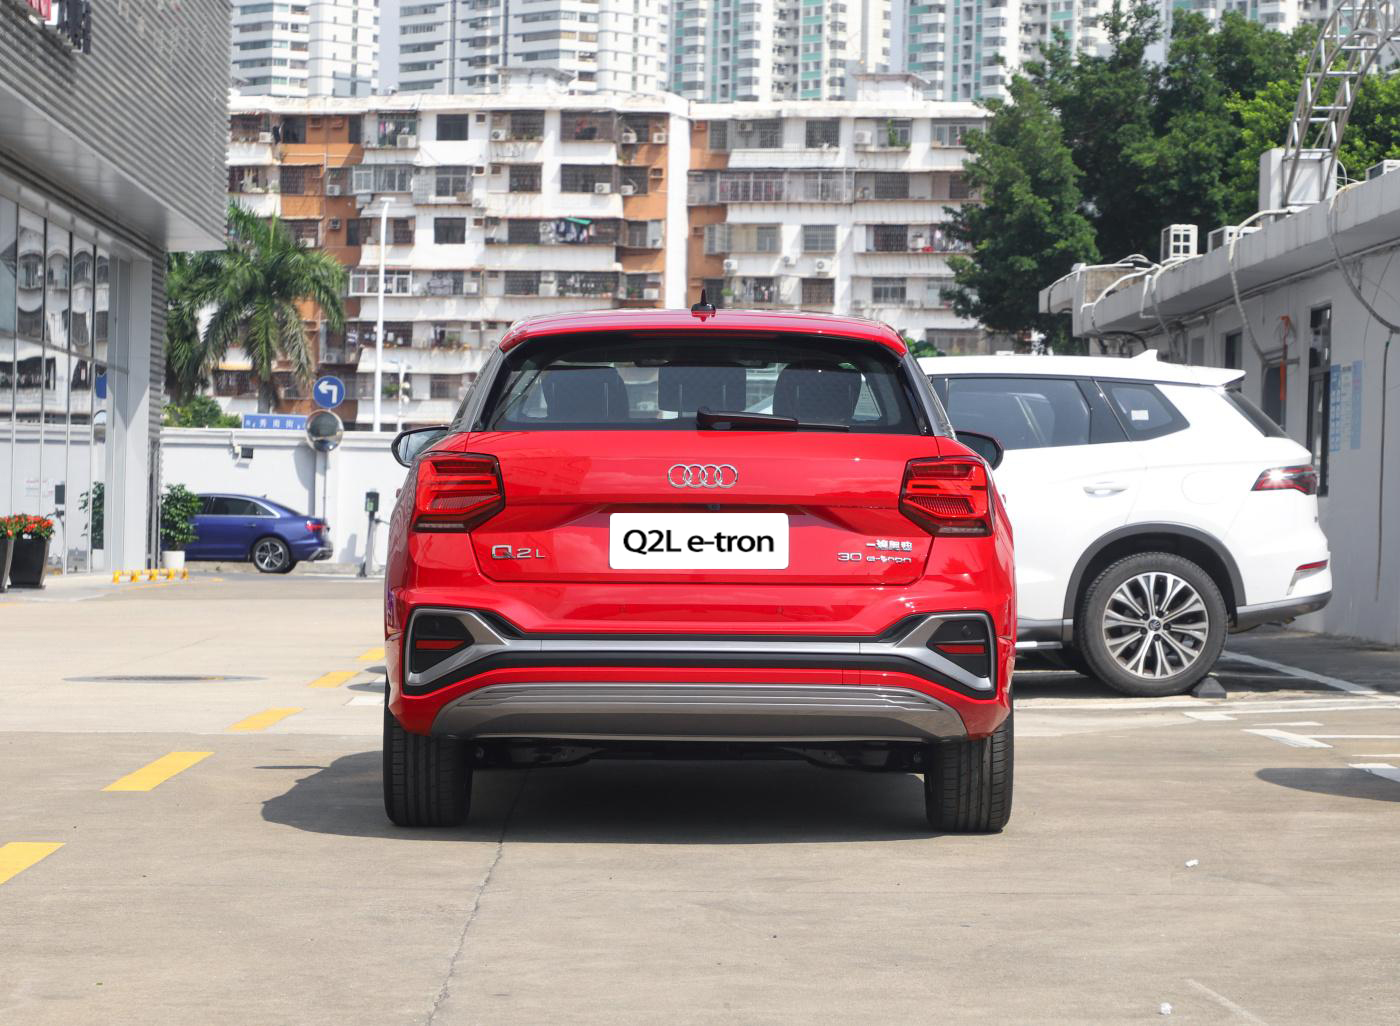 2022 Audi Q2L E-Tron Small SUV Support Export Trade in China - Audi - 5